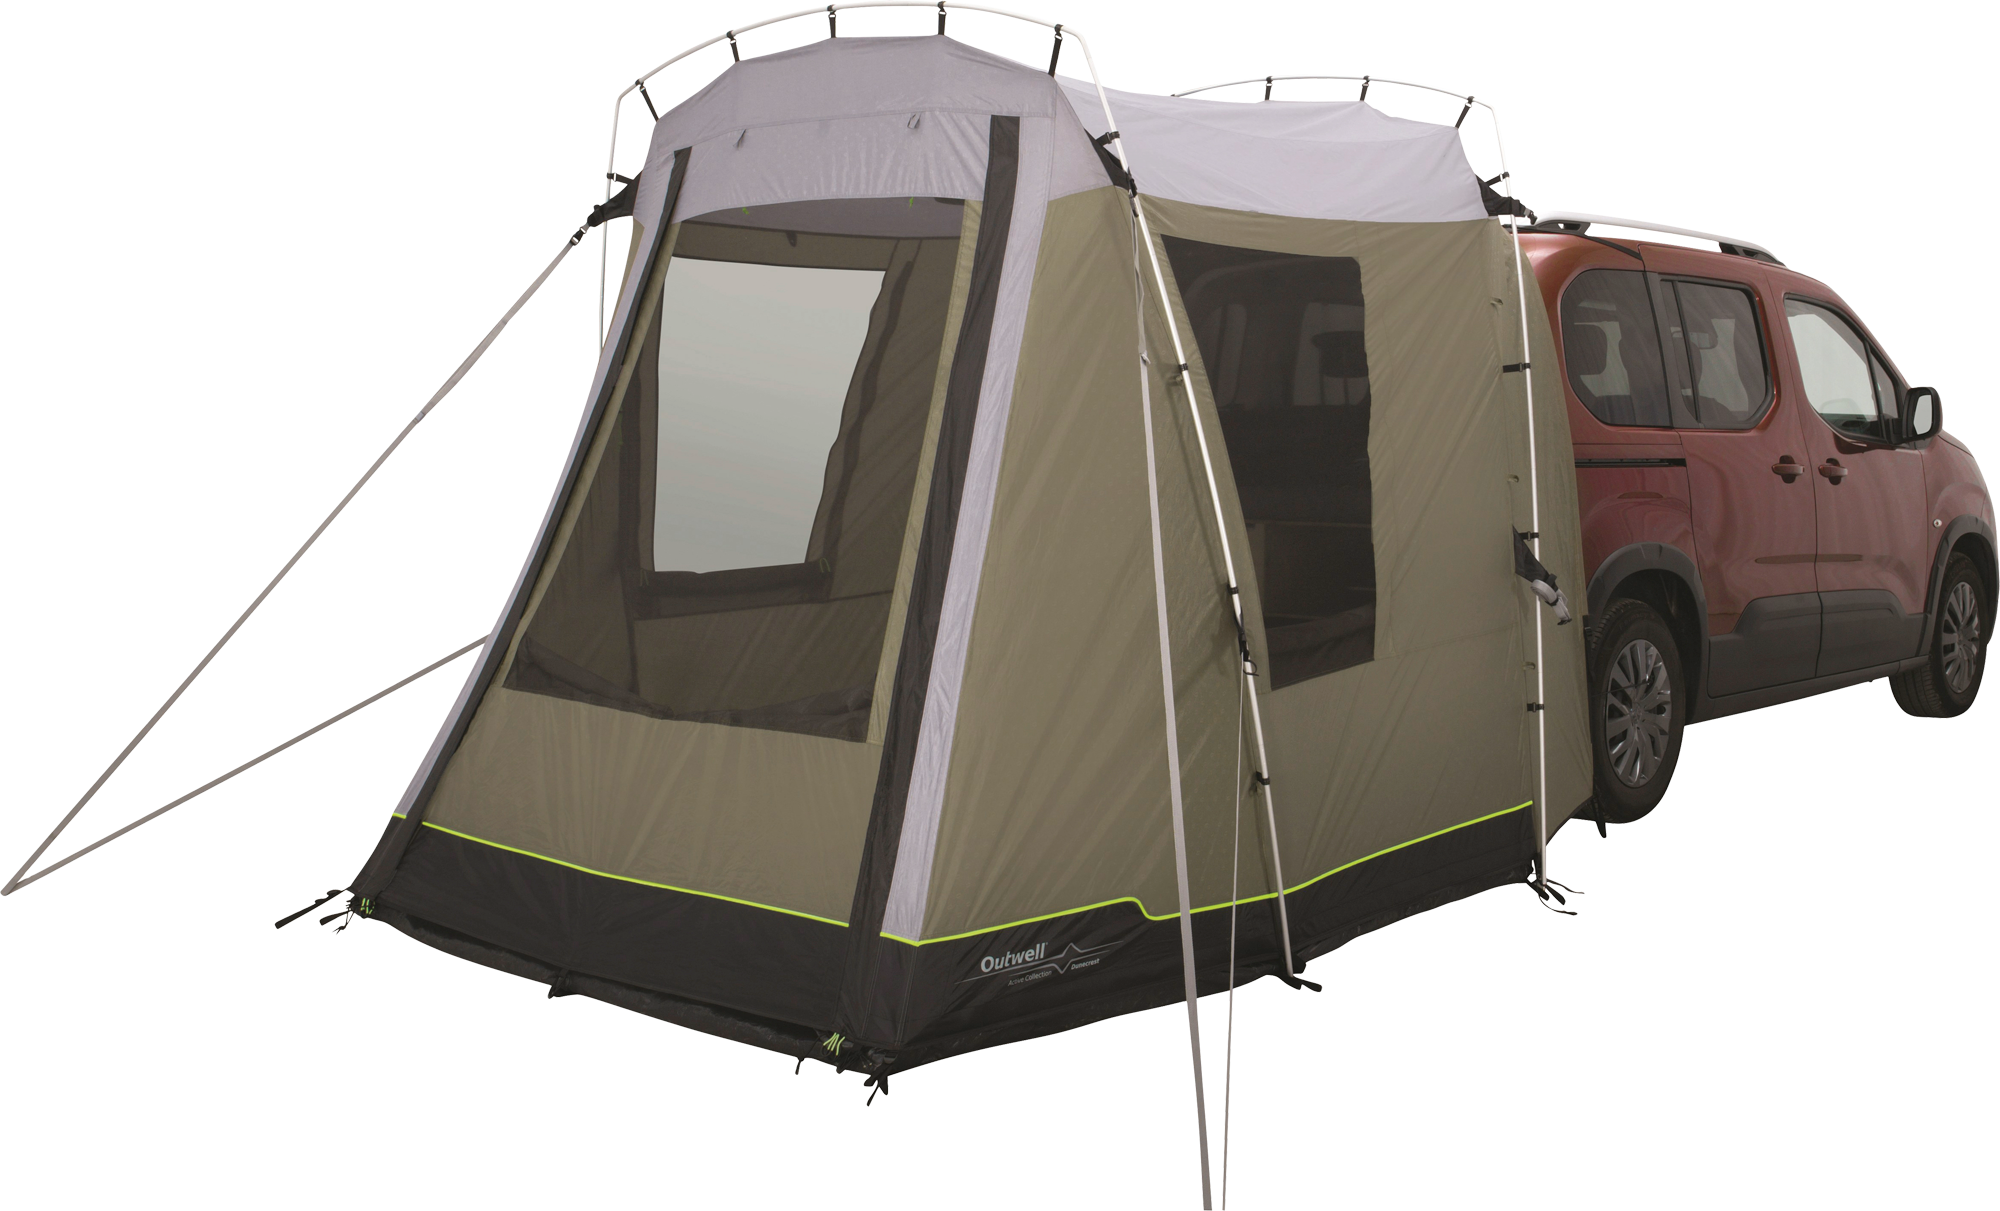 Escurreplatos plegable outwell ideal para camping, autocaravana, camper